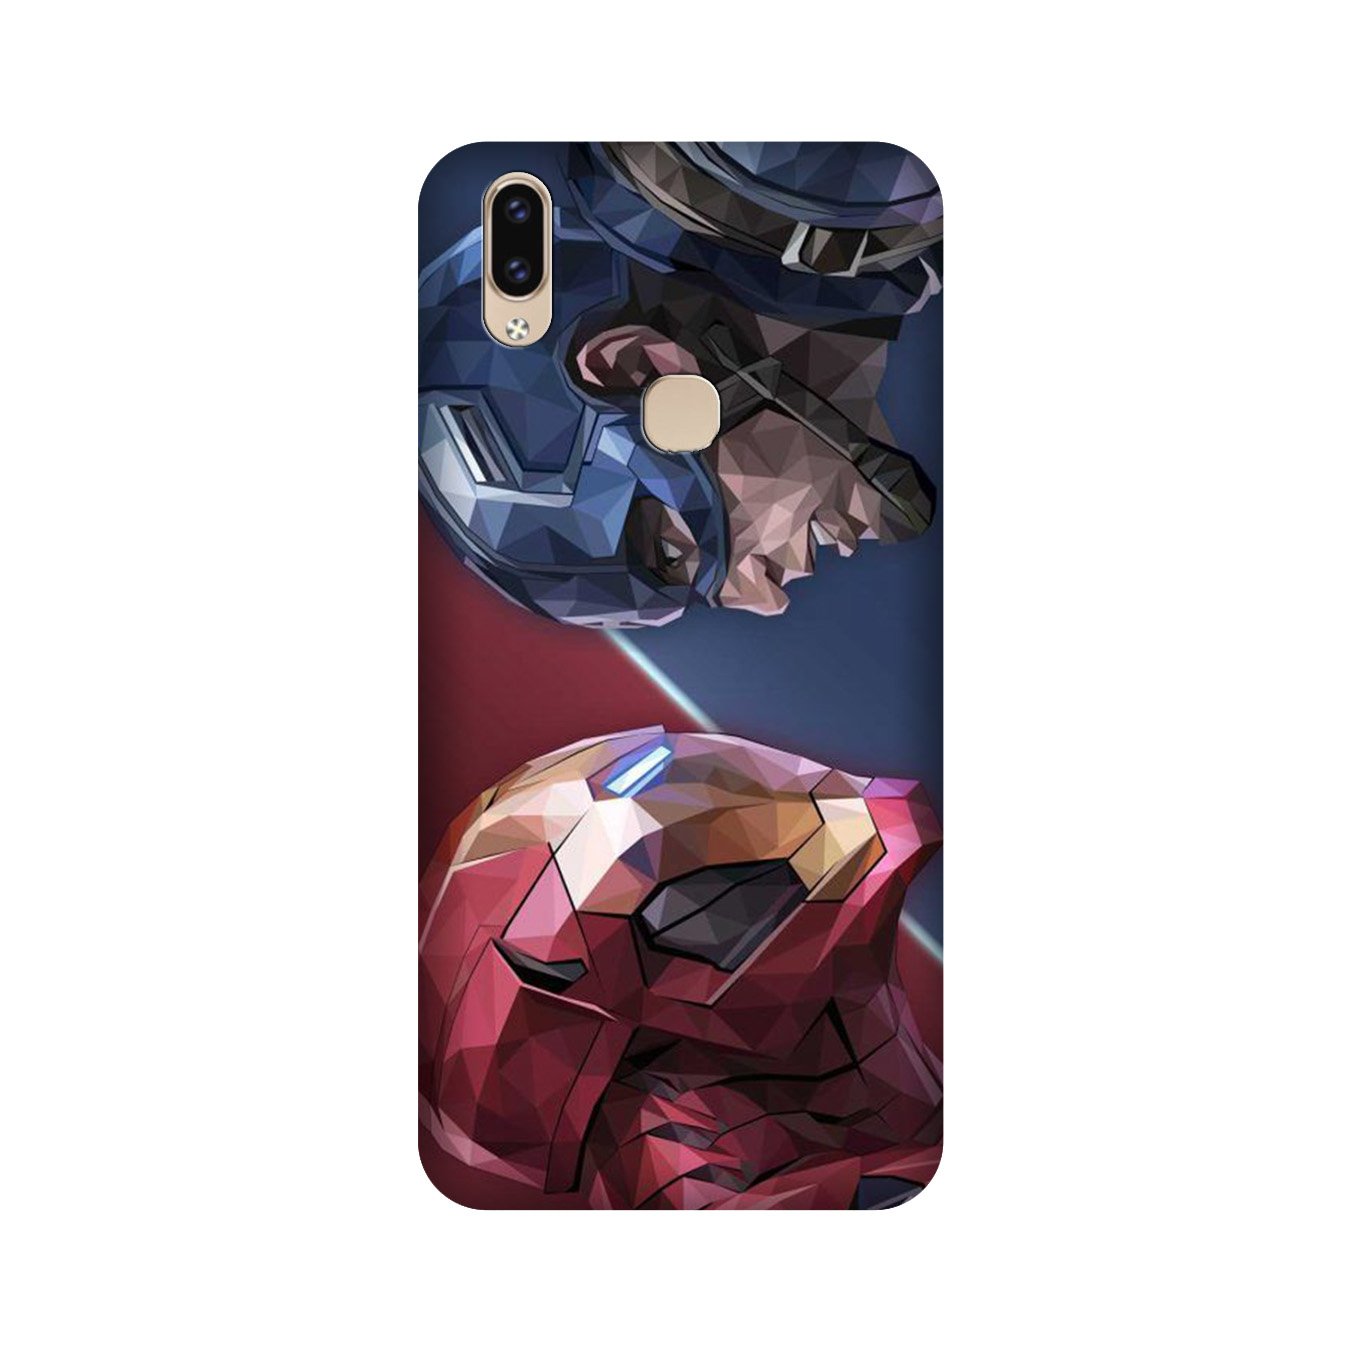 Ironman Captain America Case for Vivo V9 pro (Design No. 245)